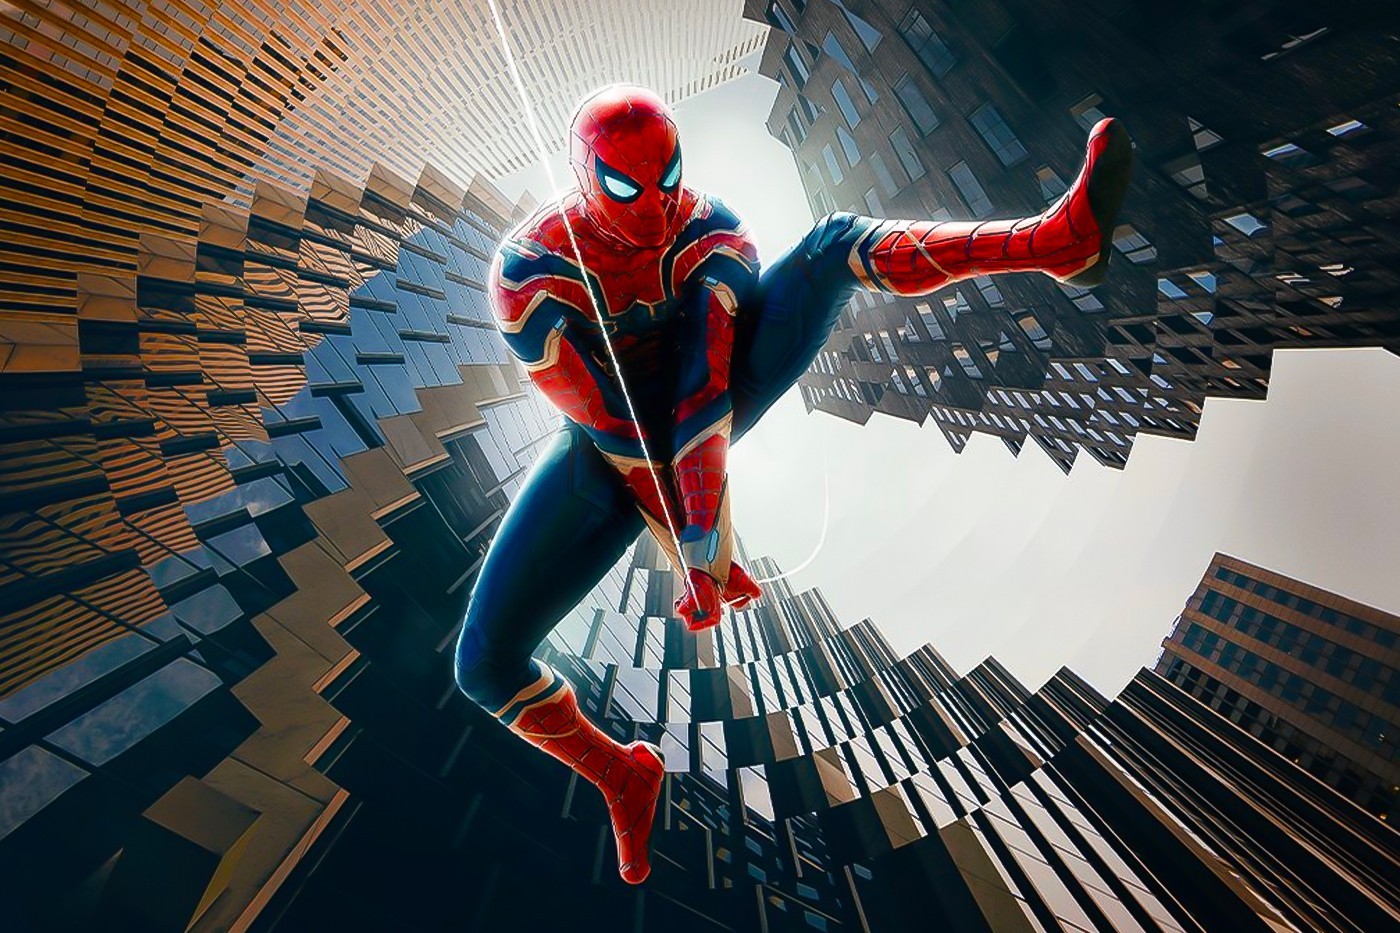 《蜘蛛侠:英雄无归 / Spider-man：No Way Home》北美票房突破 $6 亿美元